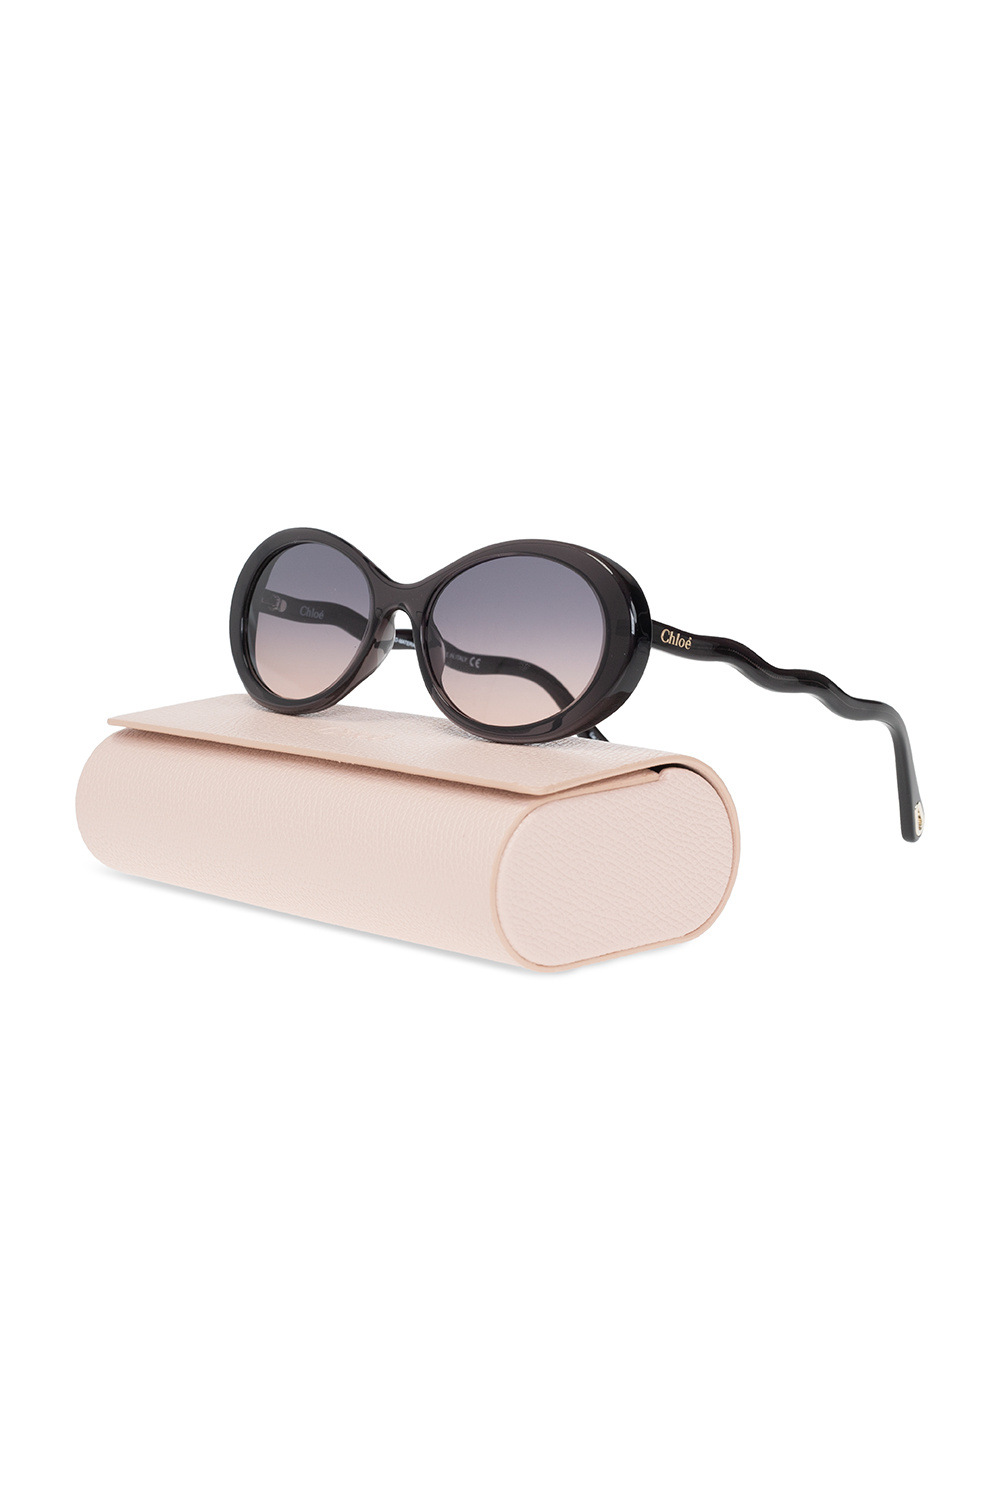 Gradient sunglasses Chloé - Kinney Round Acetate Sunglasses Mens 